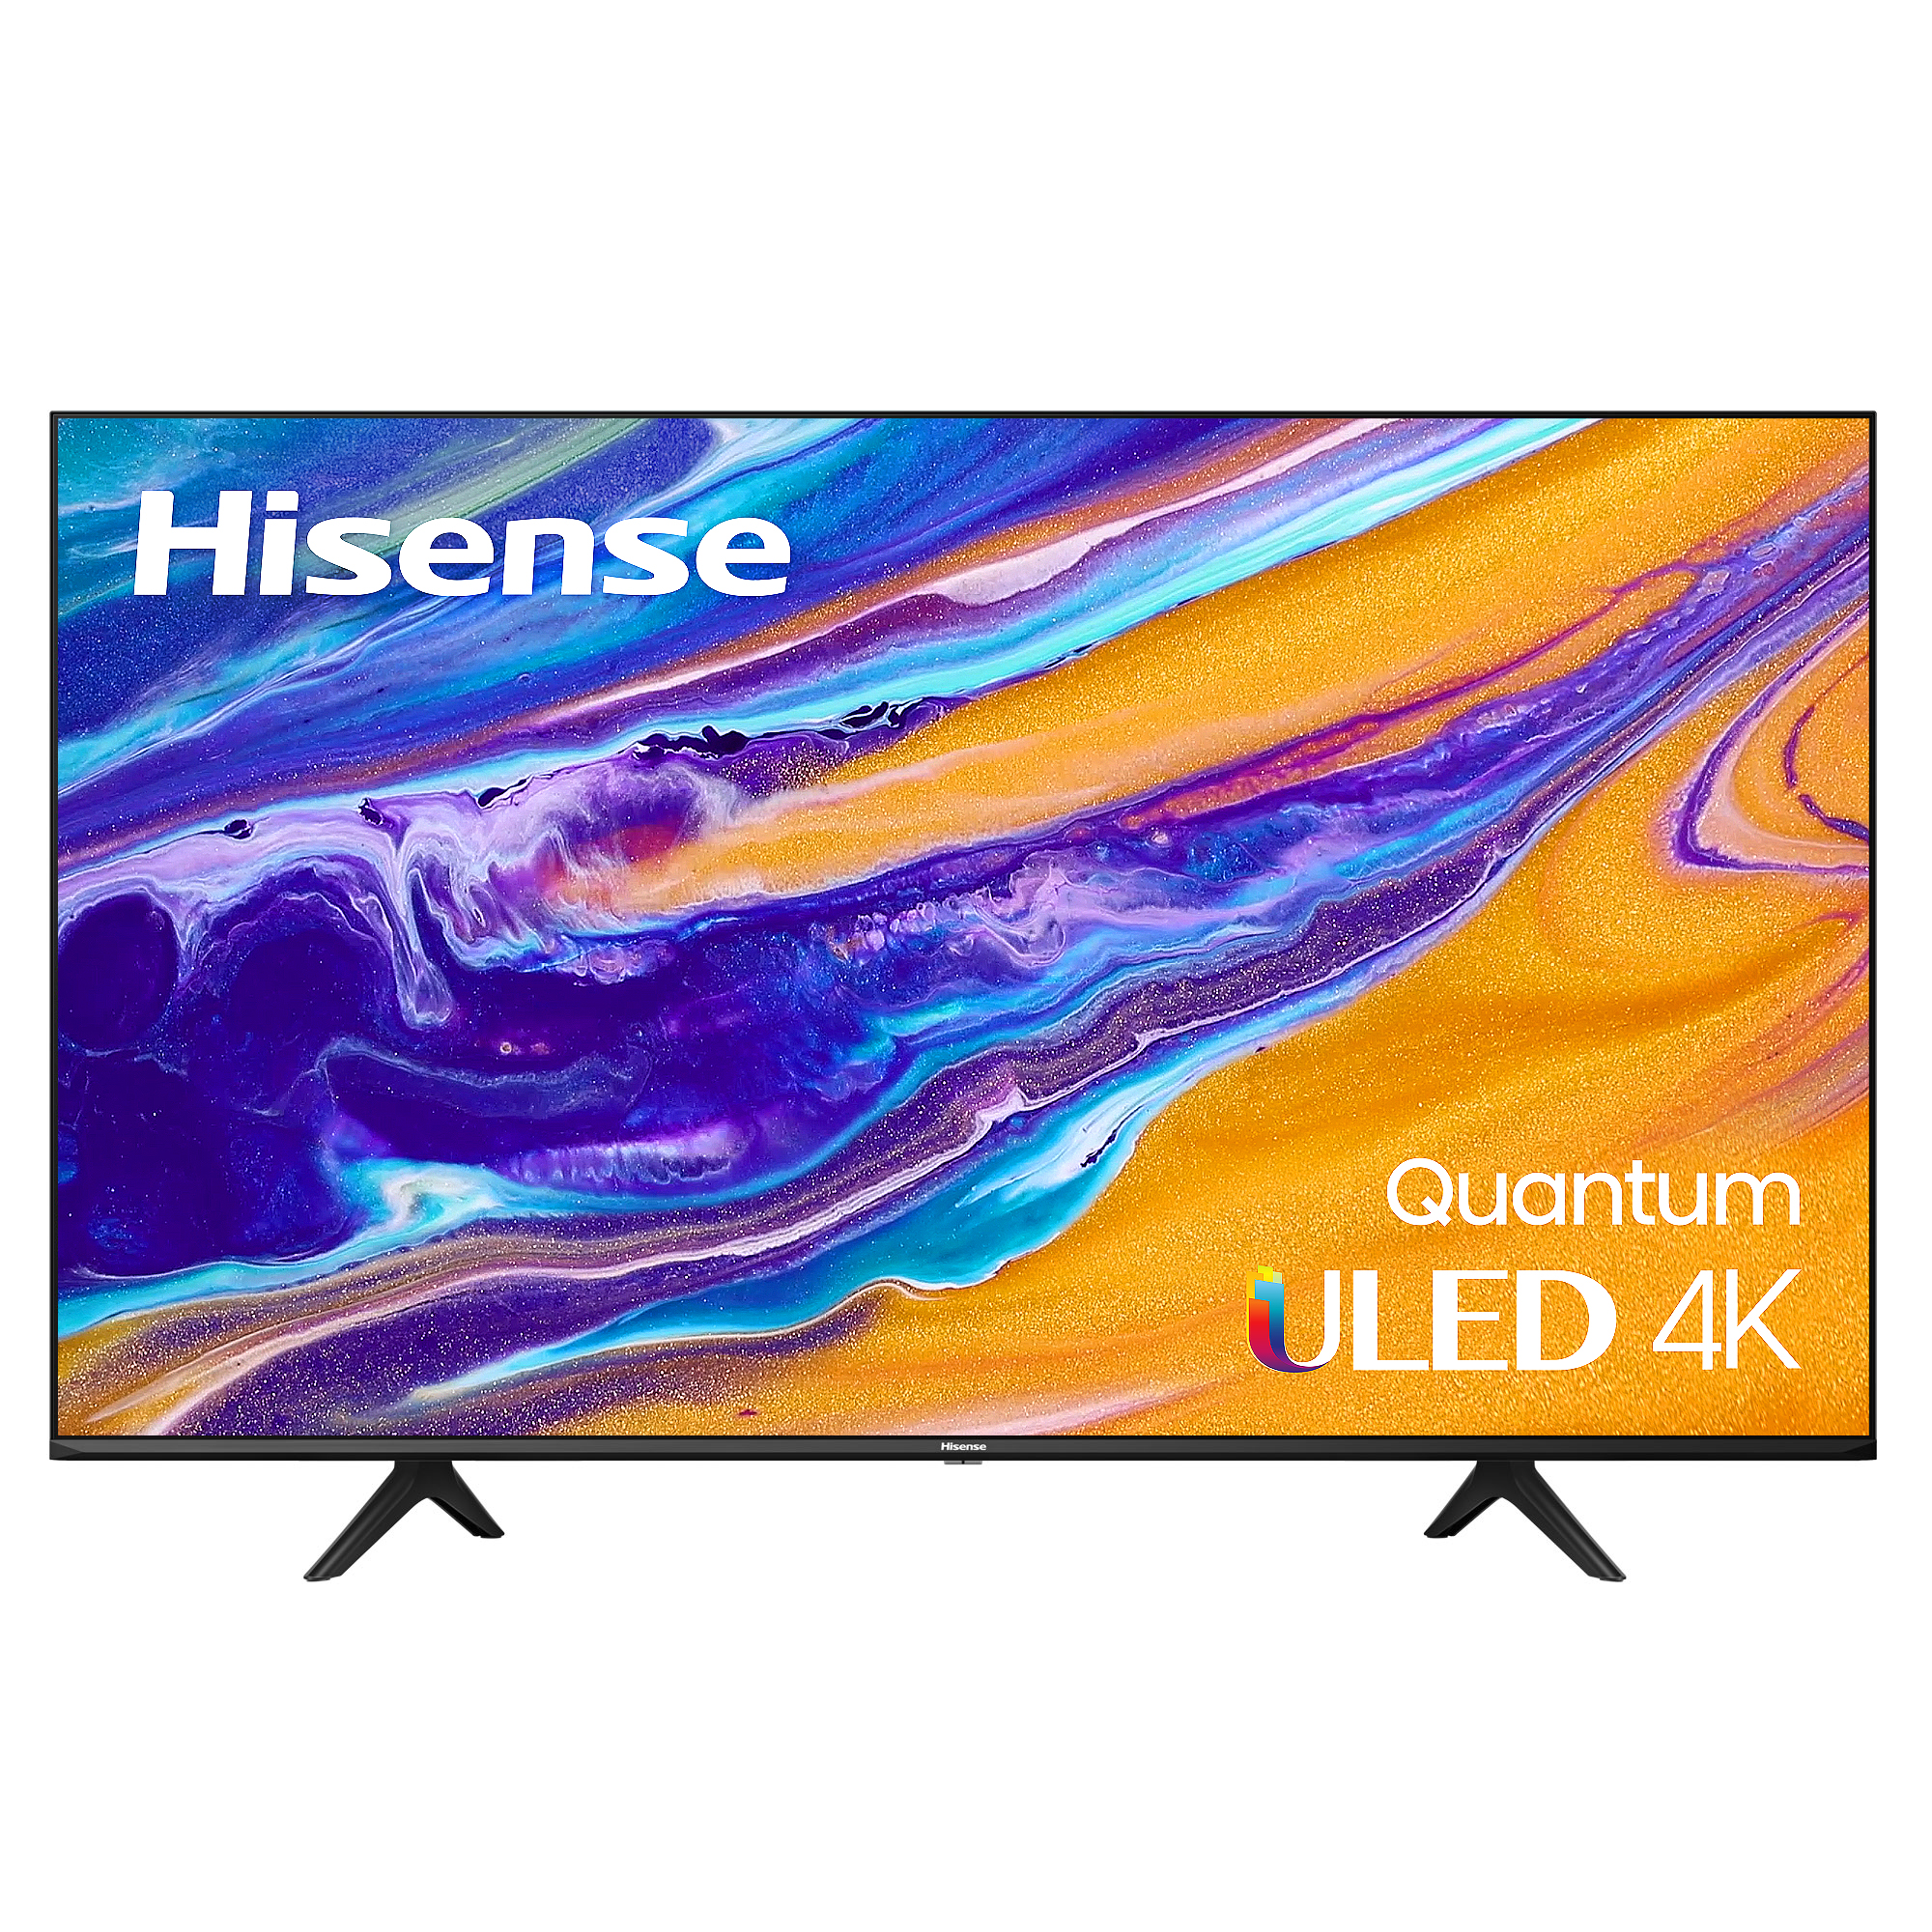 Hisense 55" Quantum 4K ULED Android Smart TV HDR U6G Series 55U6G - image 1 of 17